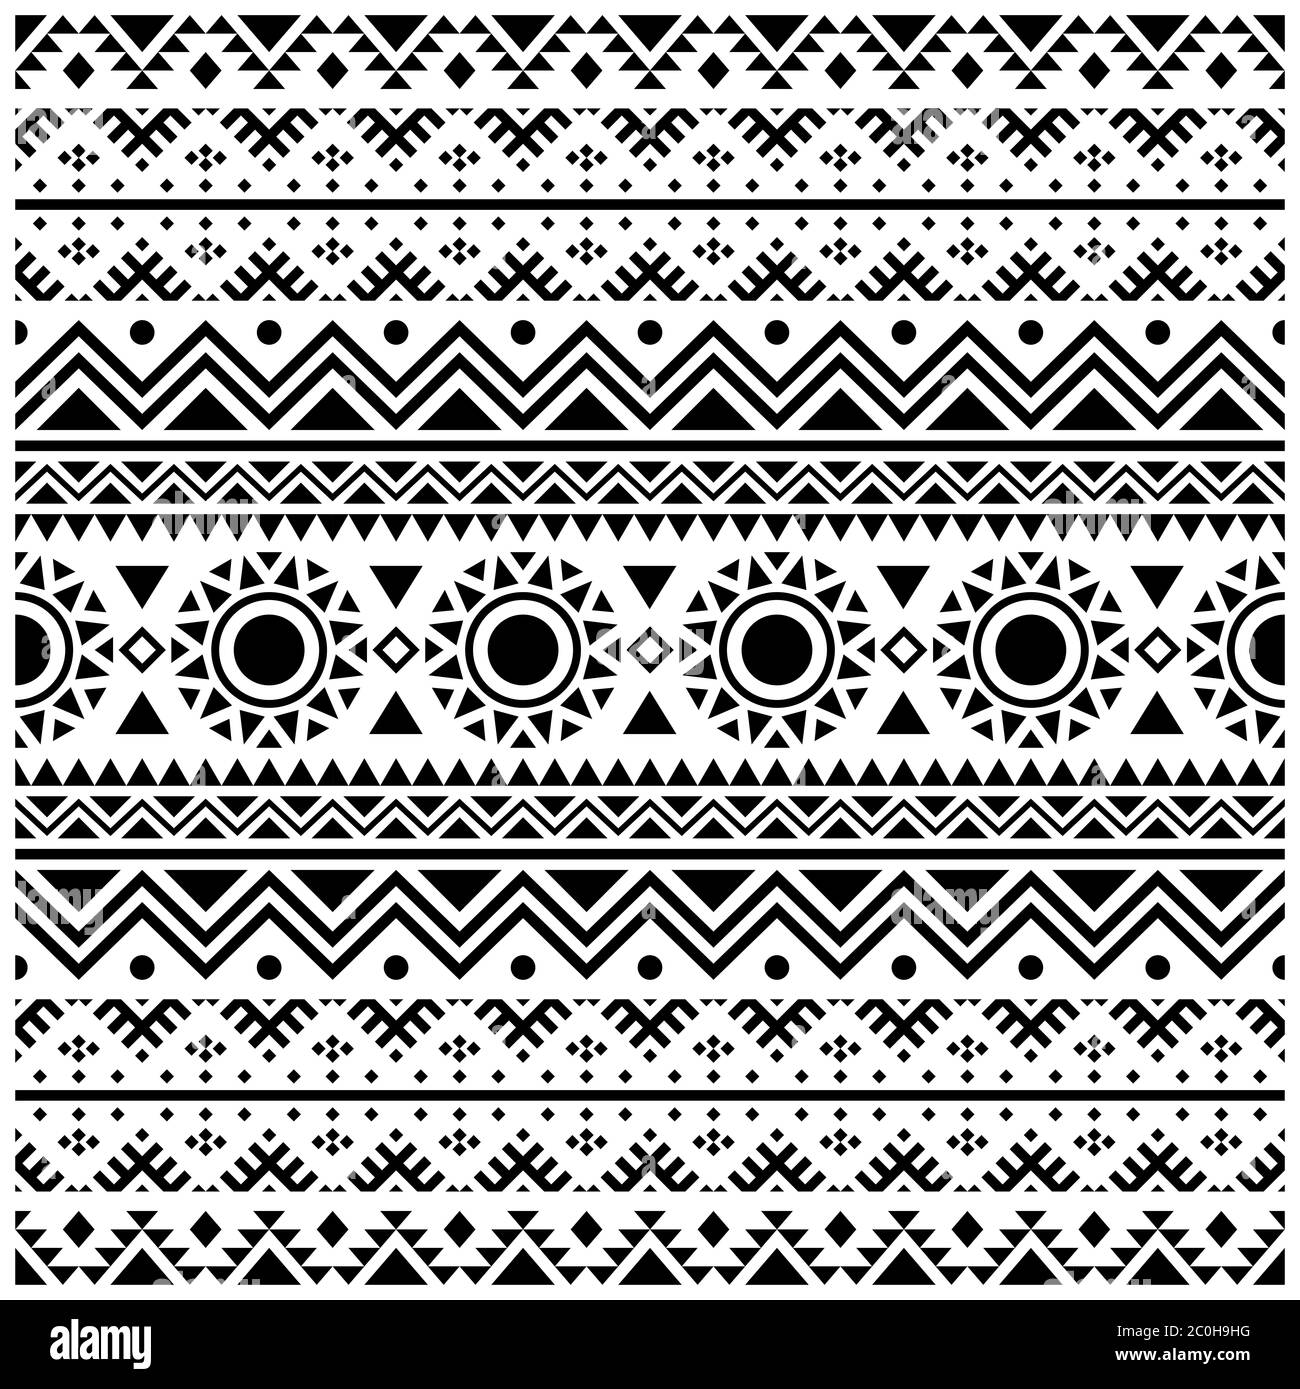 Fabric Ethnic seamless geometric pattern, traditional tribal motifs in ...